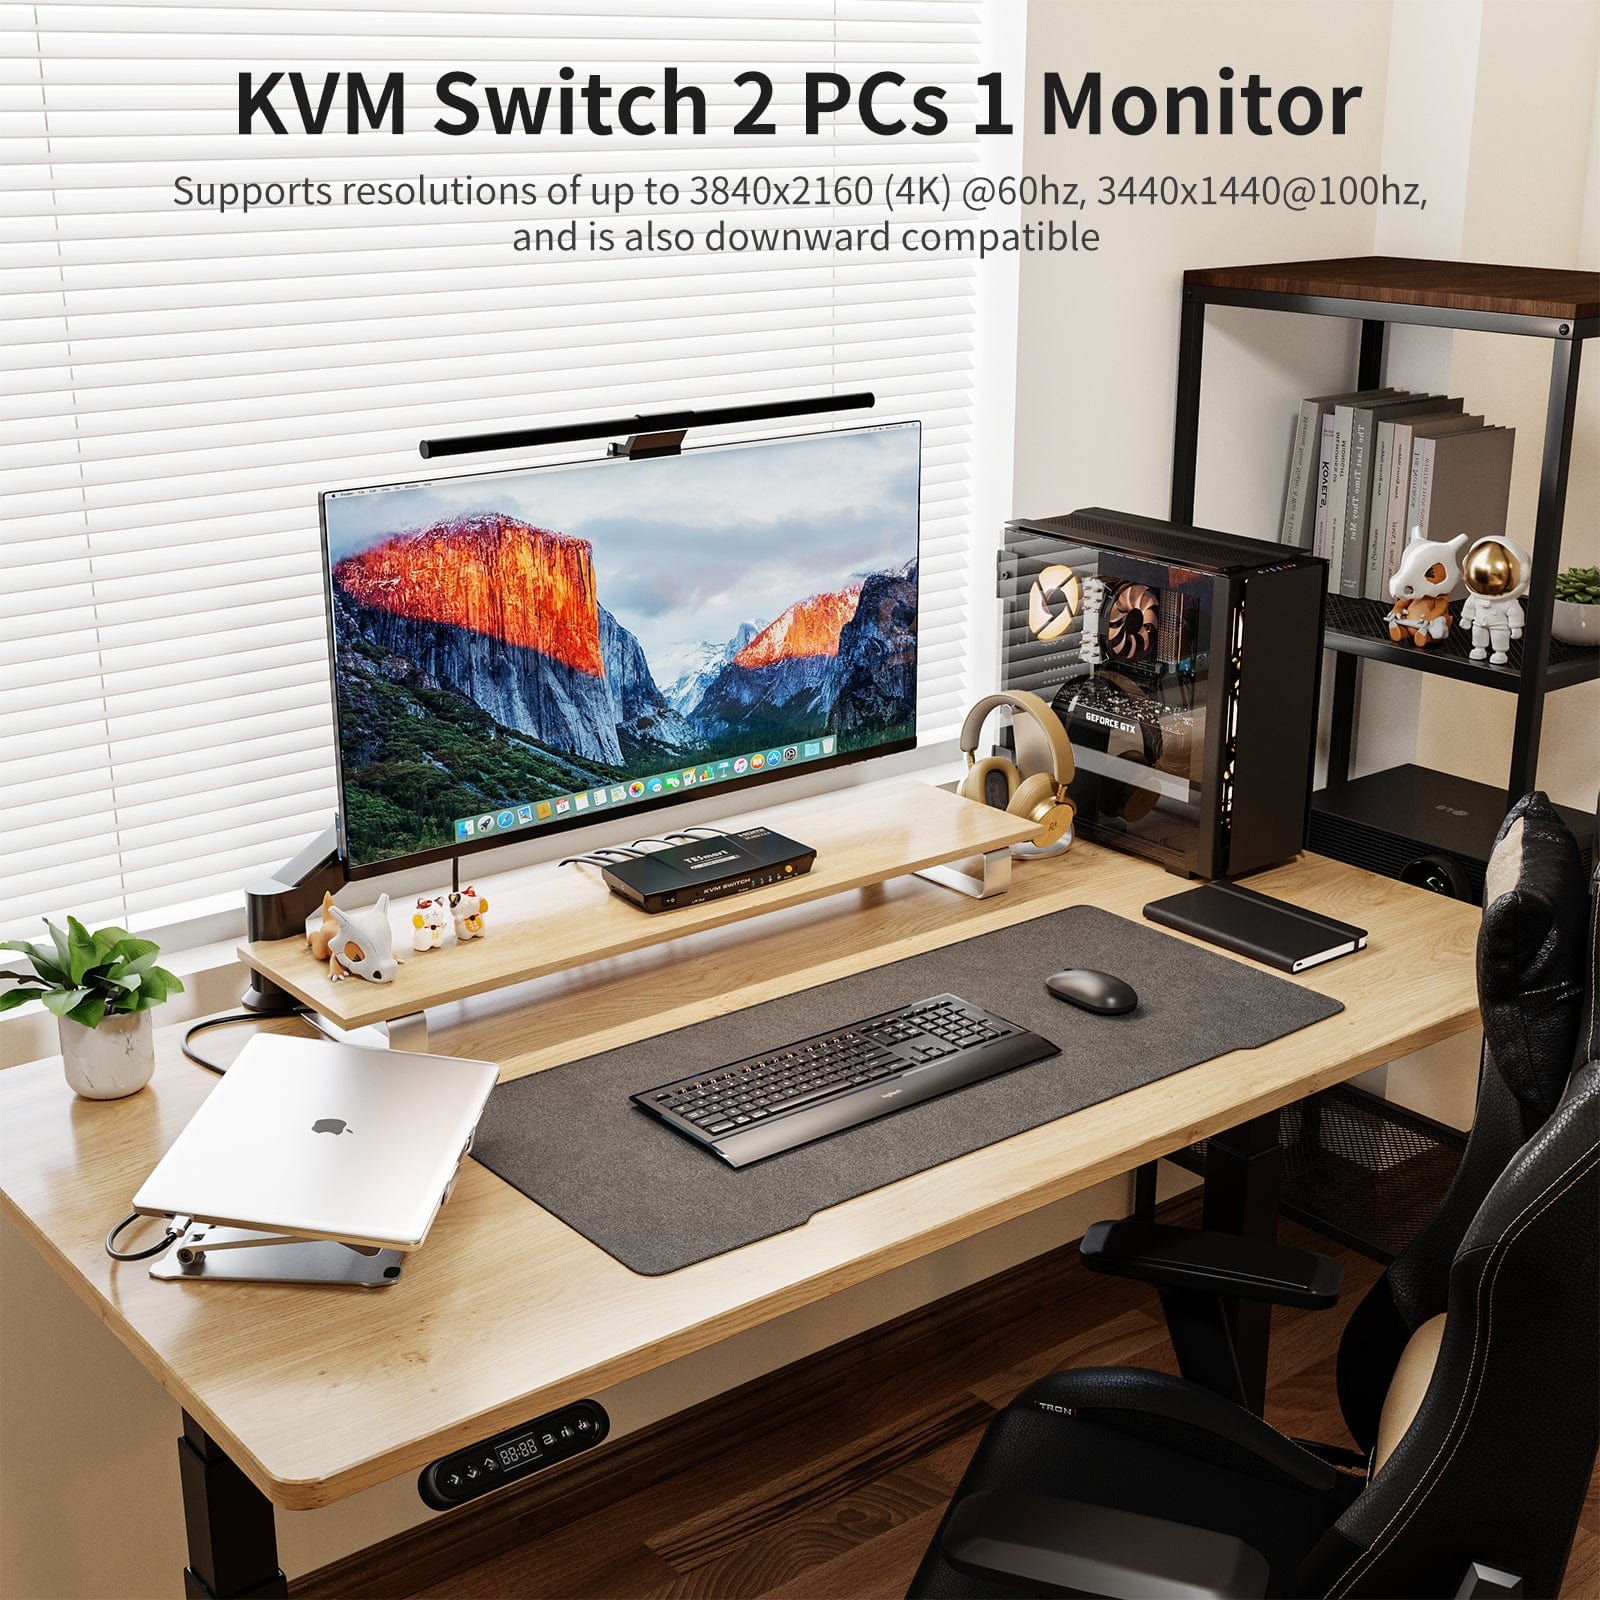 TESmart HDMI KVM Switcher 2 Port KVM Switch Kit HDMI 4K60Hz with EDID, 2 PCs 1 Monitor HDMI KVM switch 4K HDR control 2 pc sharing USB, audio TESmart